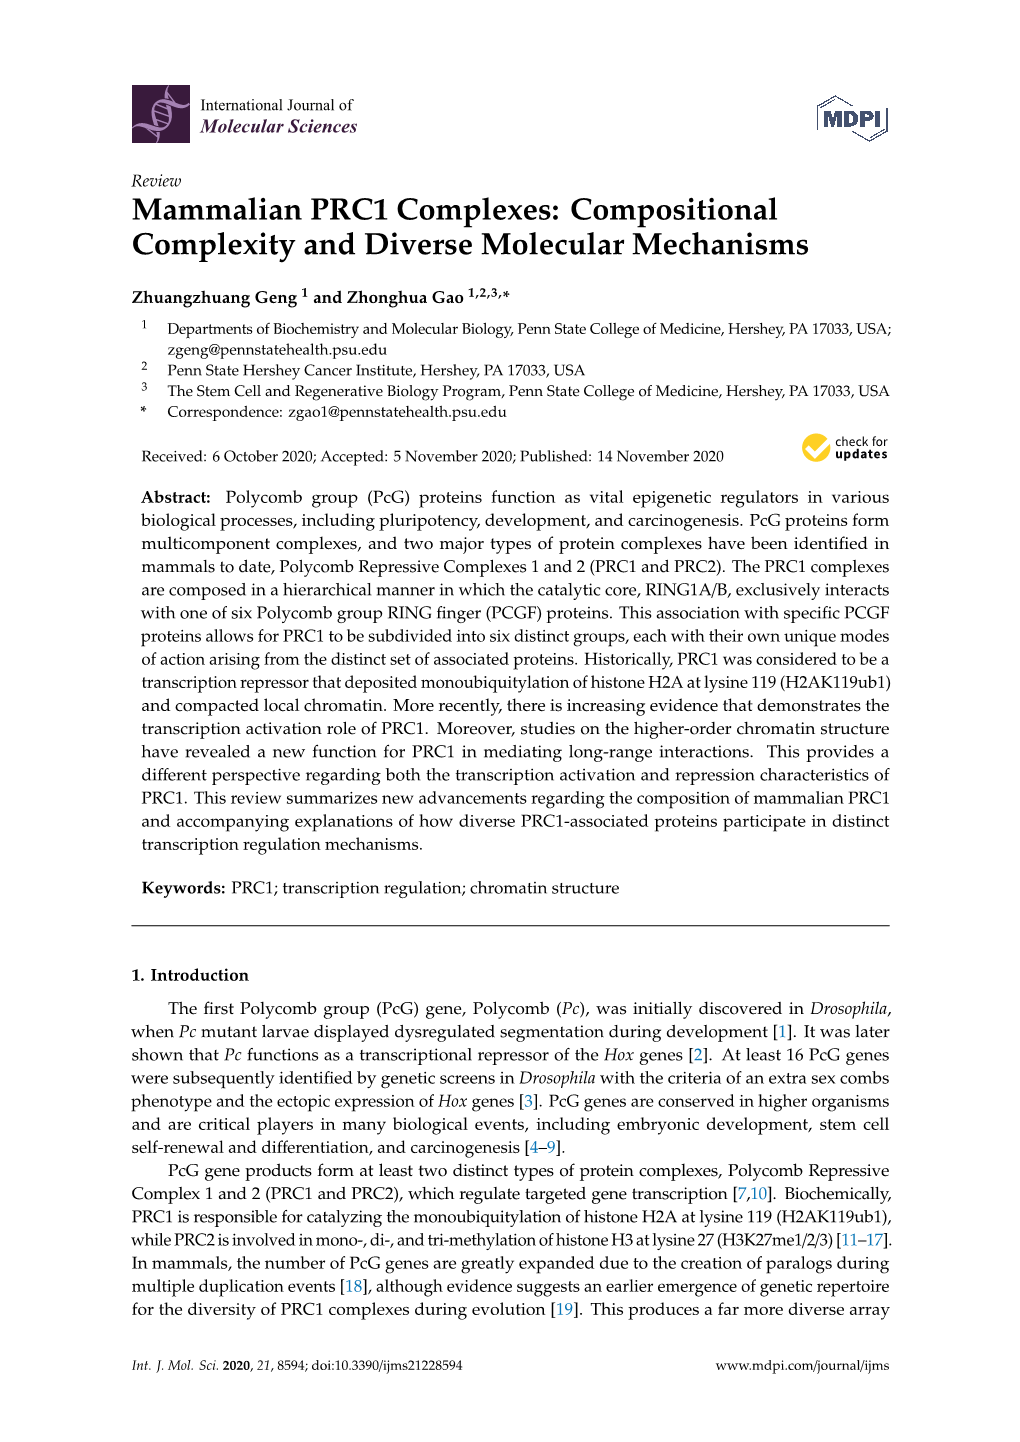 Mammalian PRC1 Complexes: Compositional Complexity and Diverse Molecular Mechanisms